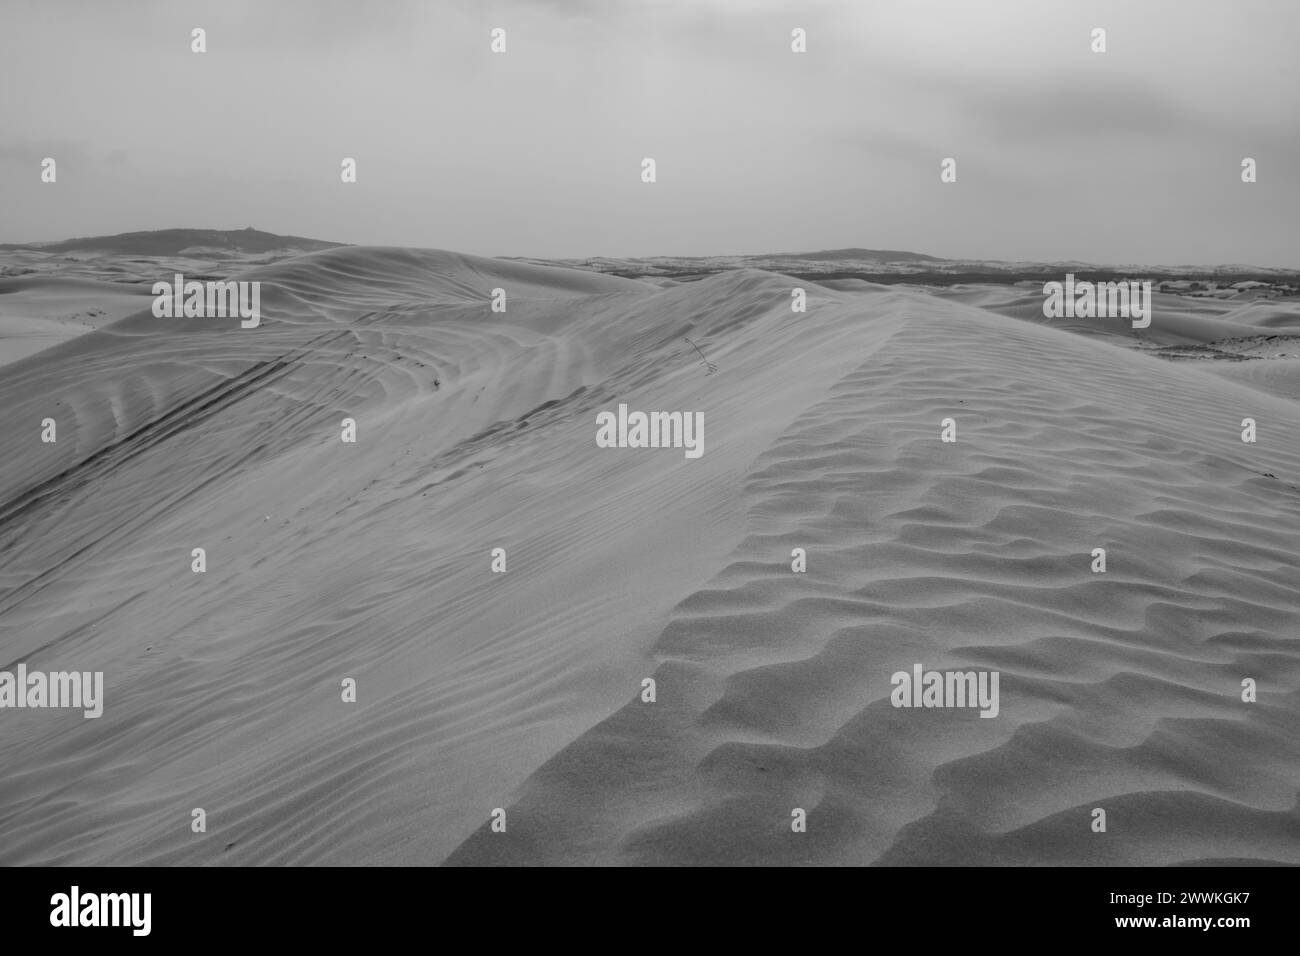 The sand hills in Ba Dan Ji Lin desert of Inner Mongolia, China. Black and white Stock Photo